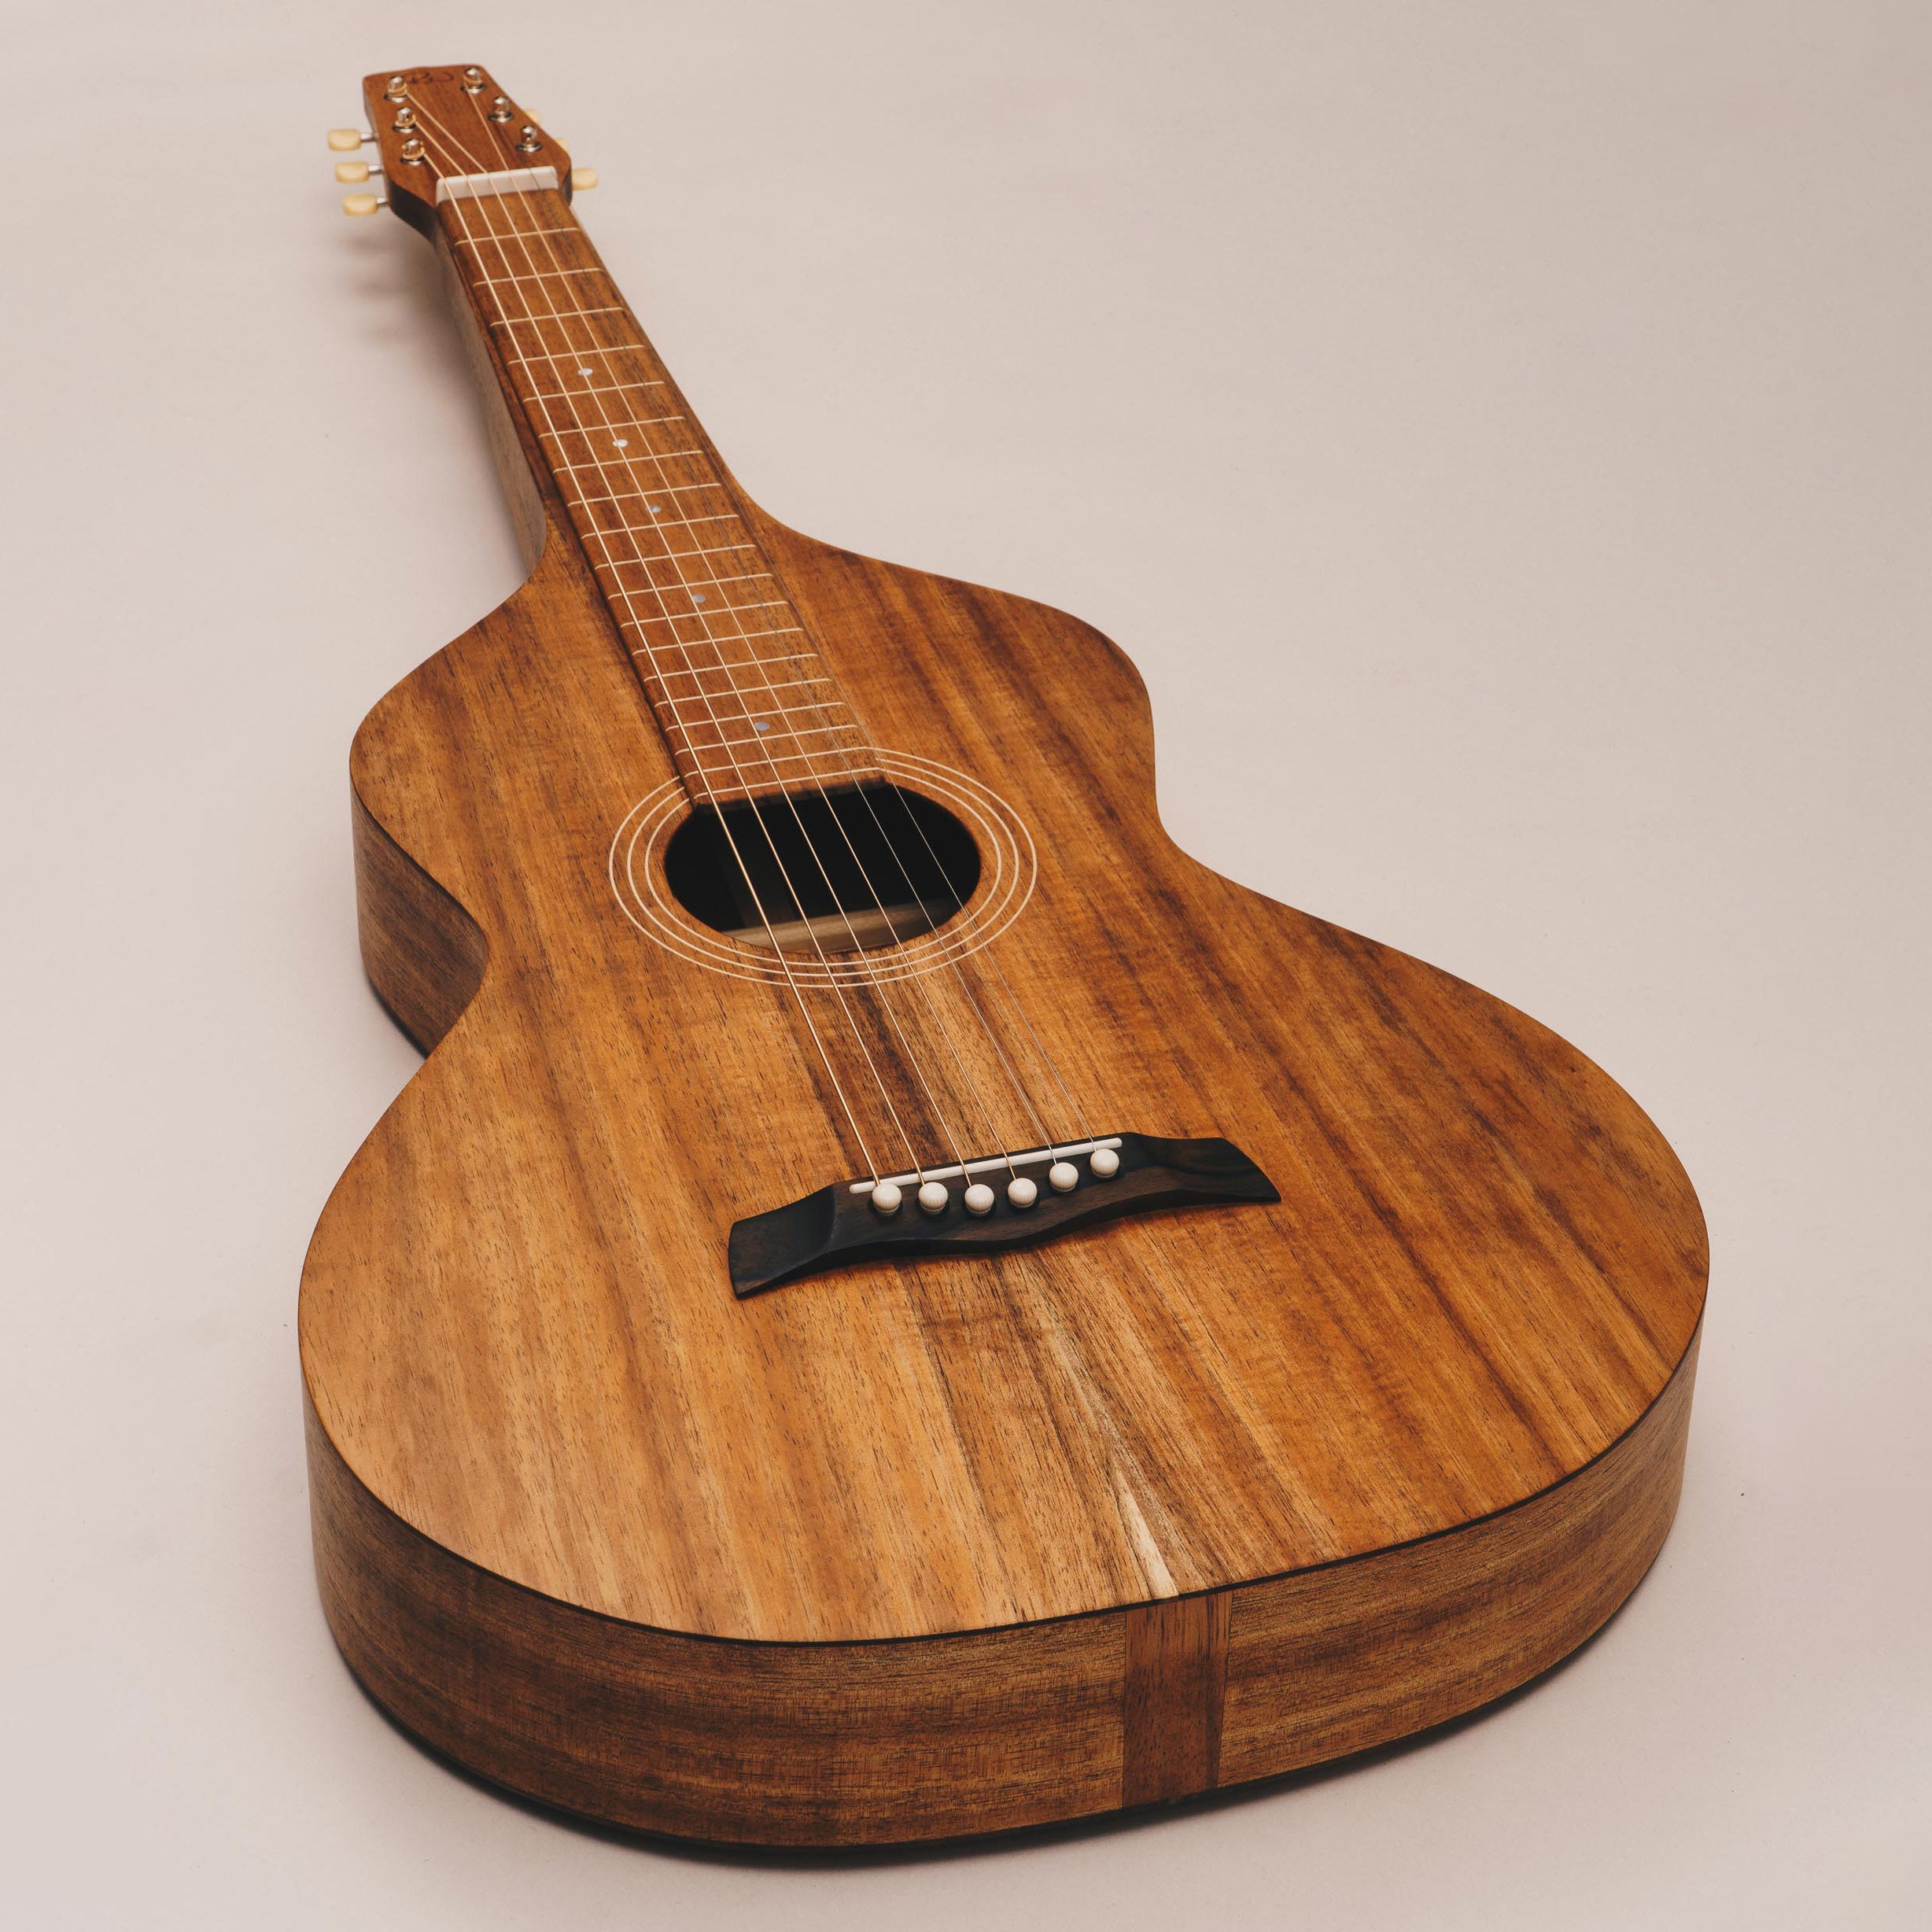 Hawaiian Koa Style 1 Weissenborn Guitar Weissenborn Acoustic Lap Steel Slide Guitar by master luthier Richard Wilson. Handcrafted in Australia. Serial no. RW2344-434.